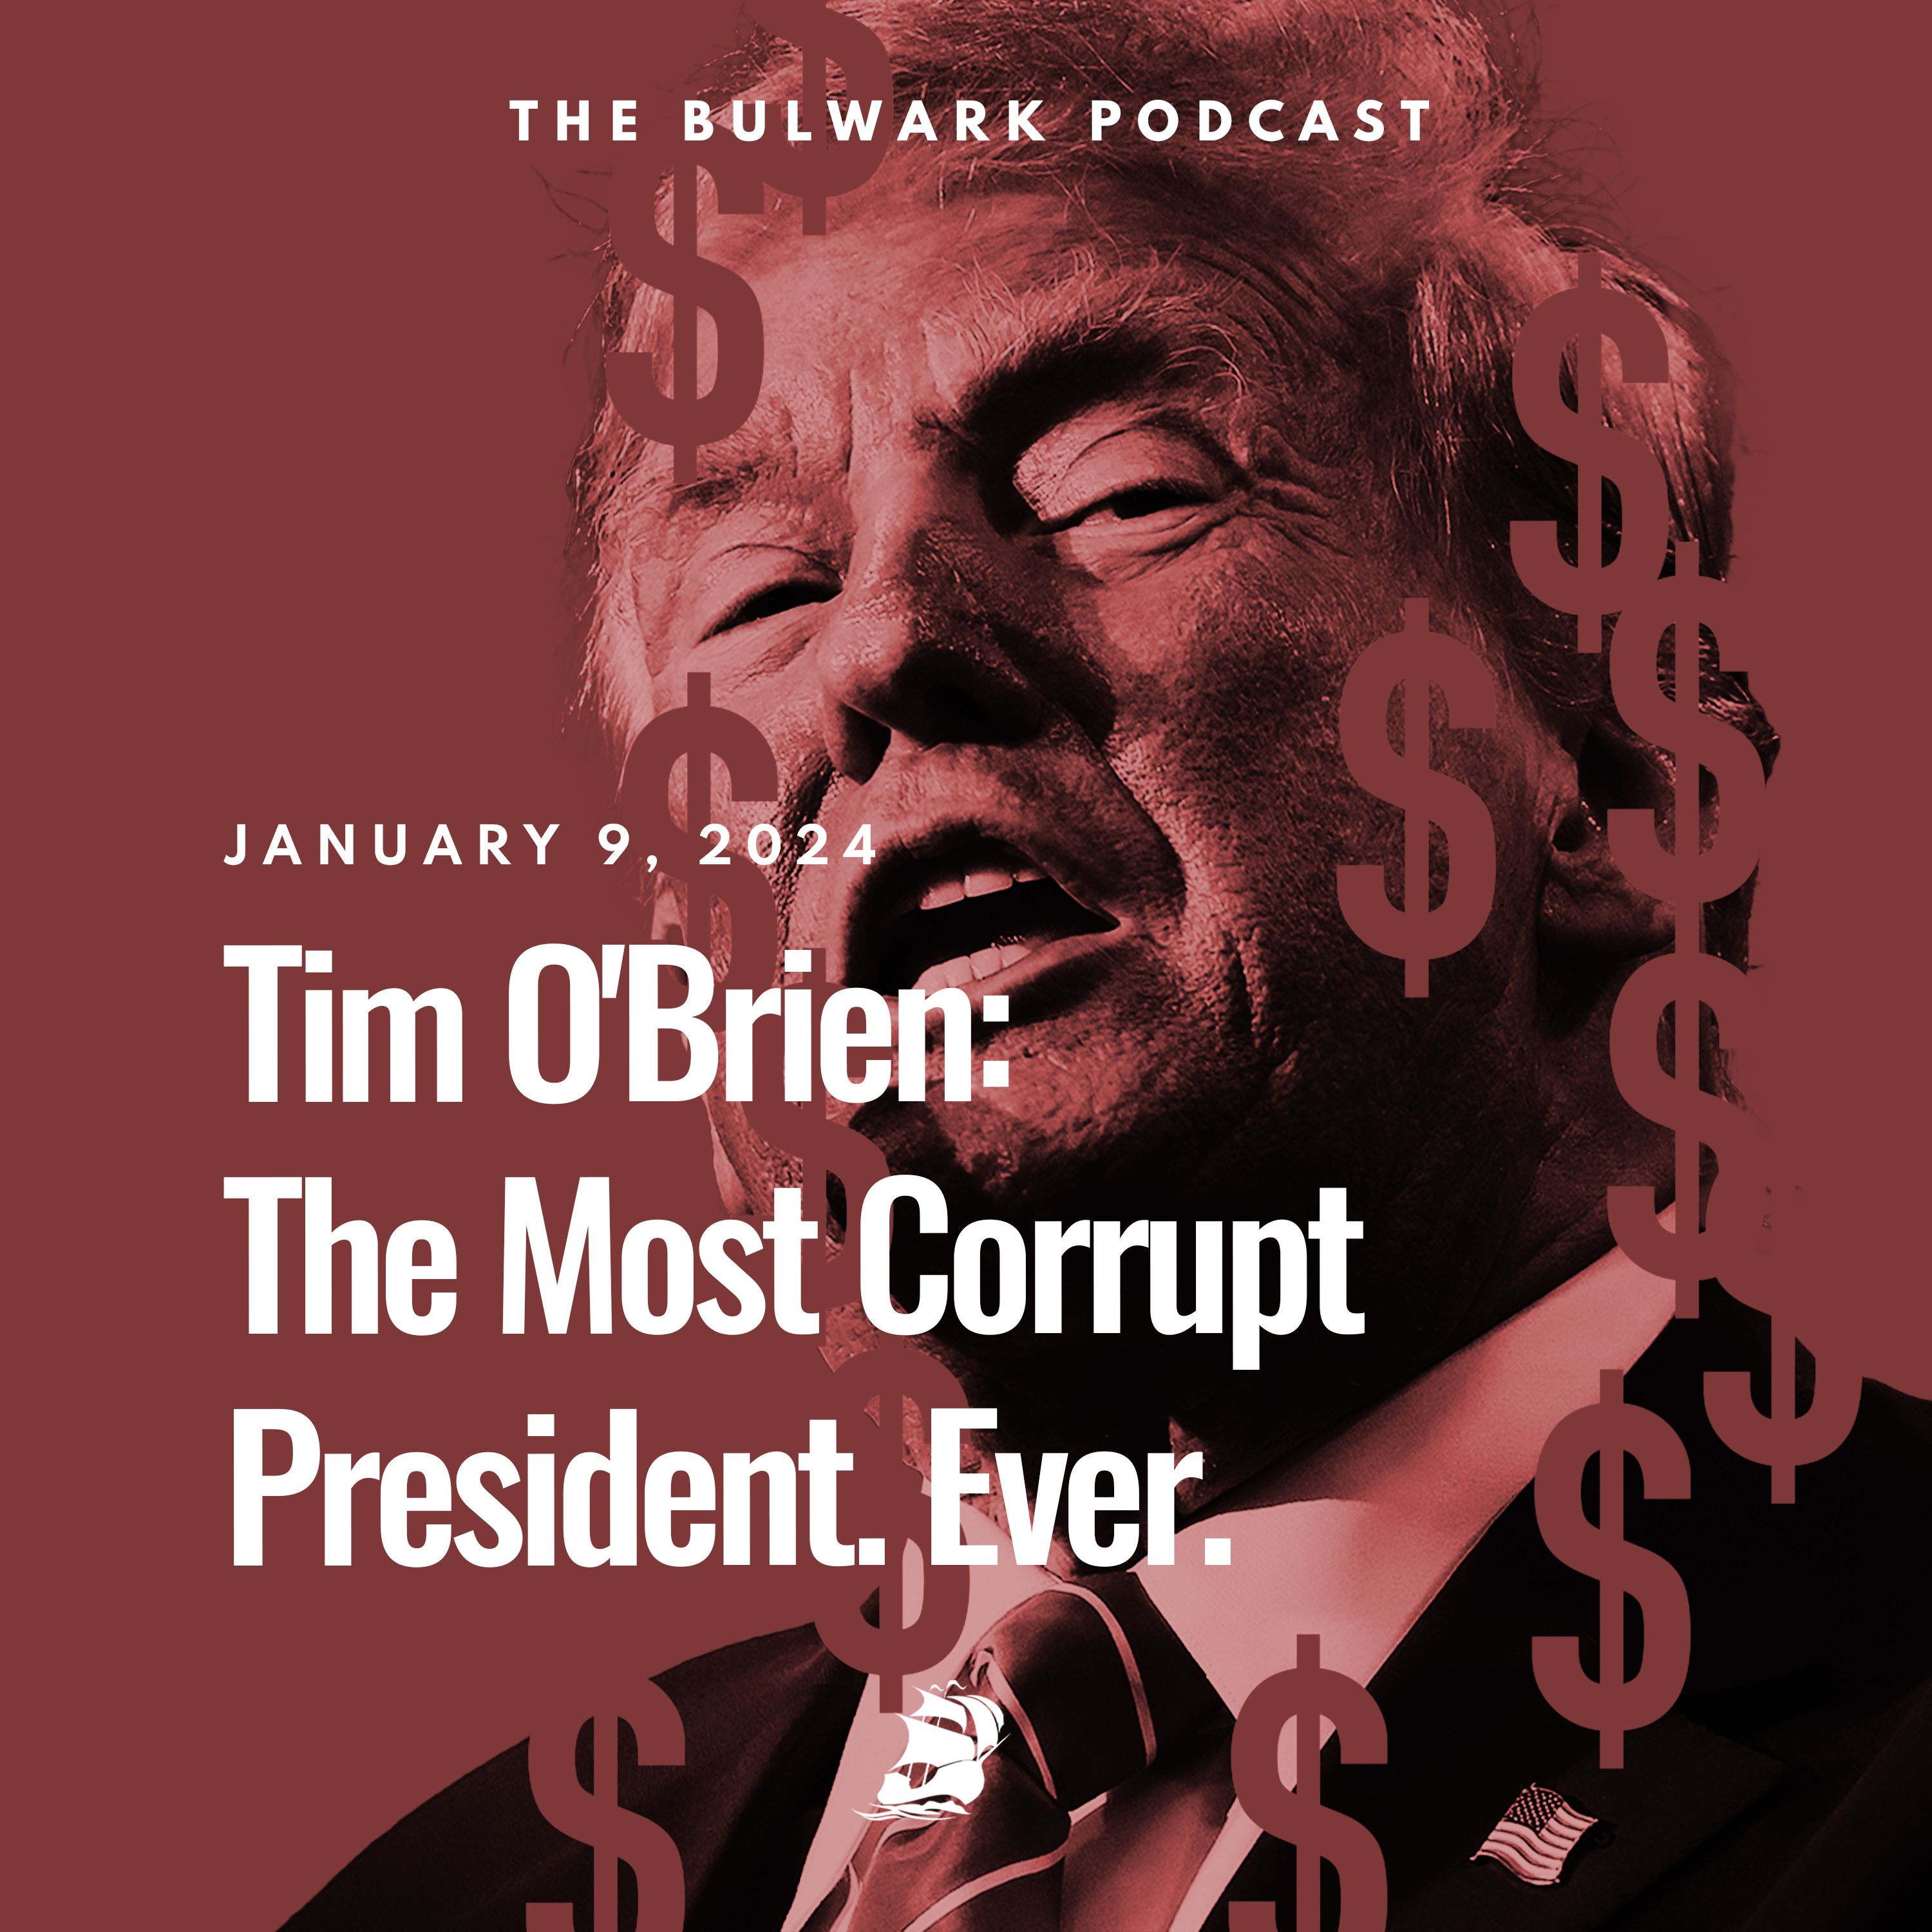 Tim O'Brien: The Most Corrupt President. Ever.